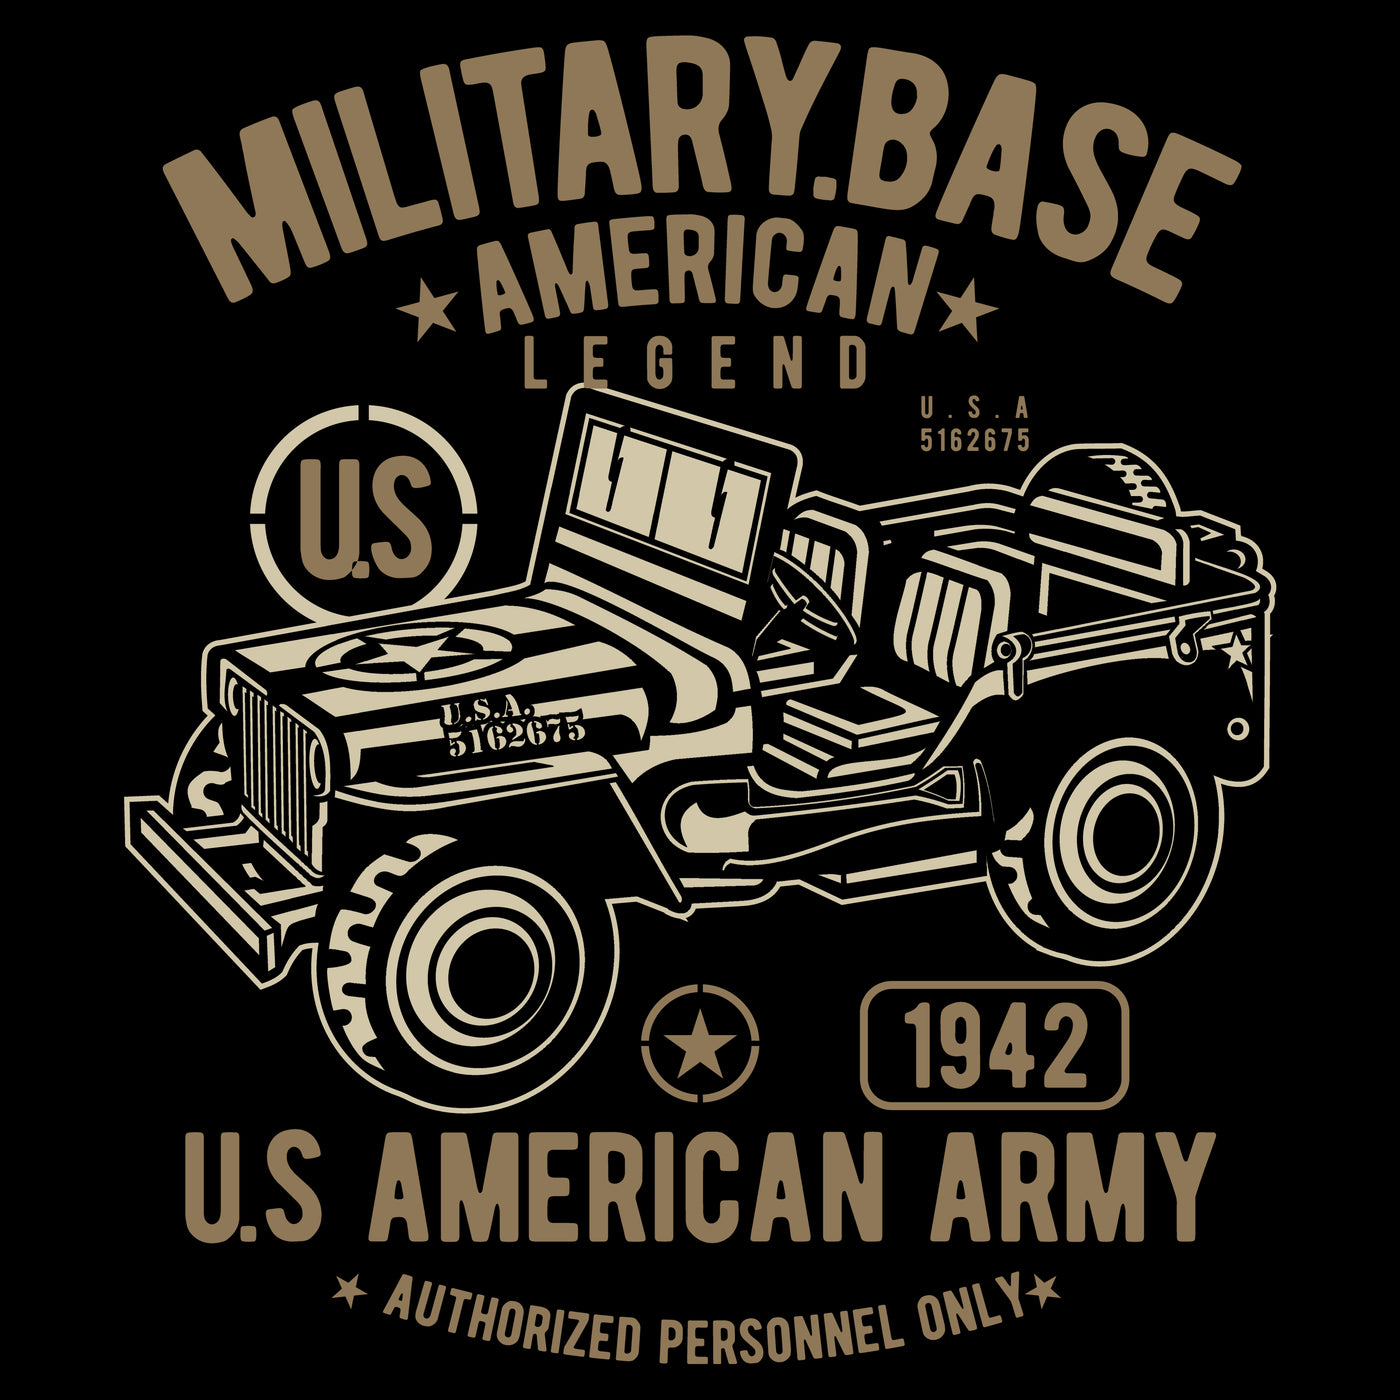 Military Base